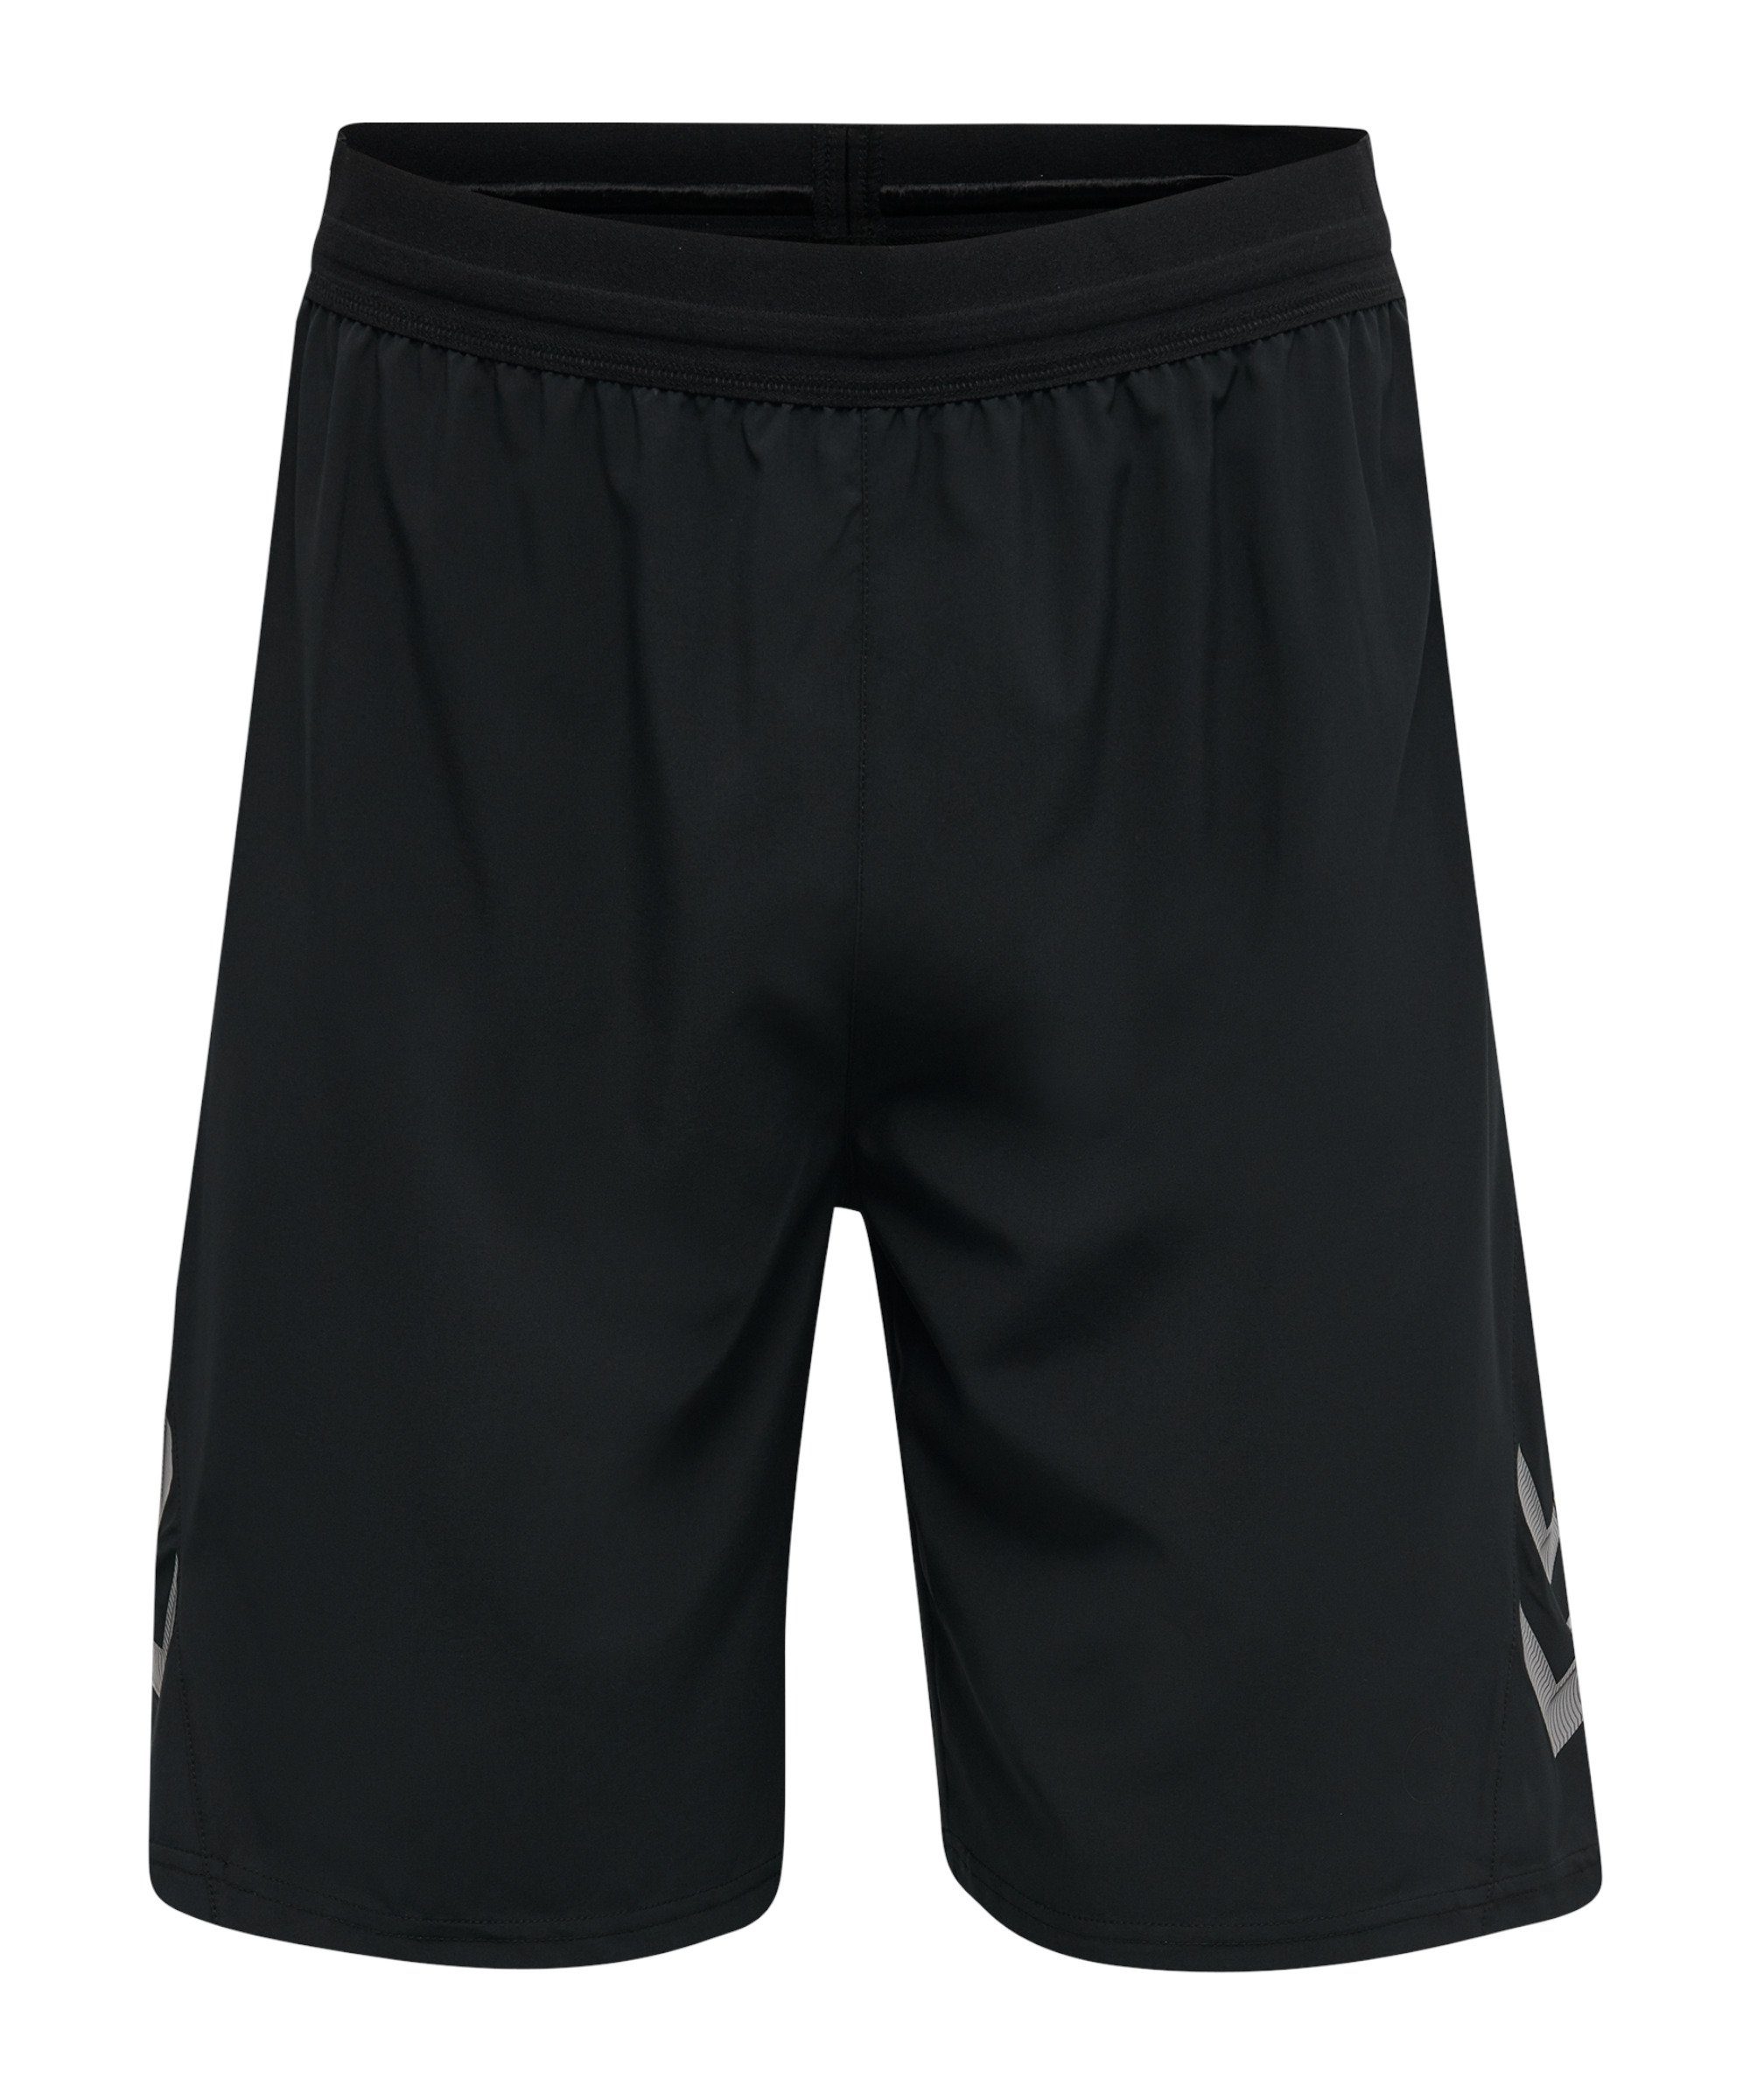 Sporthose Pro hmlLEAD Shorts hummel schwarz